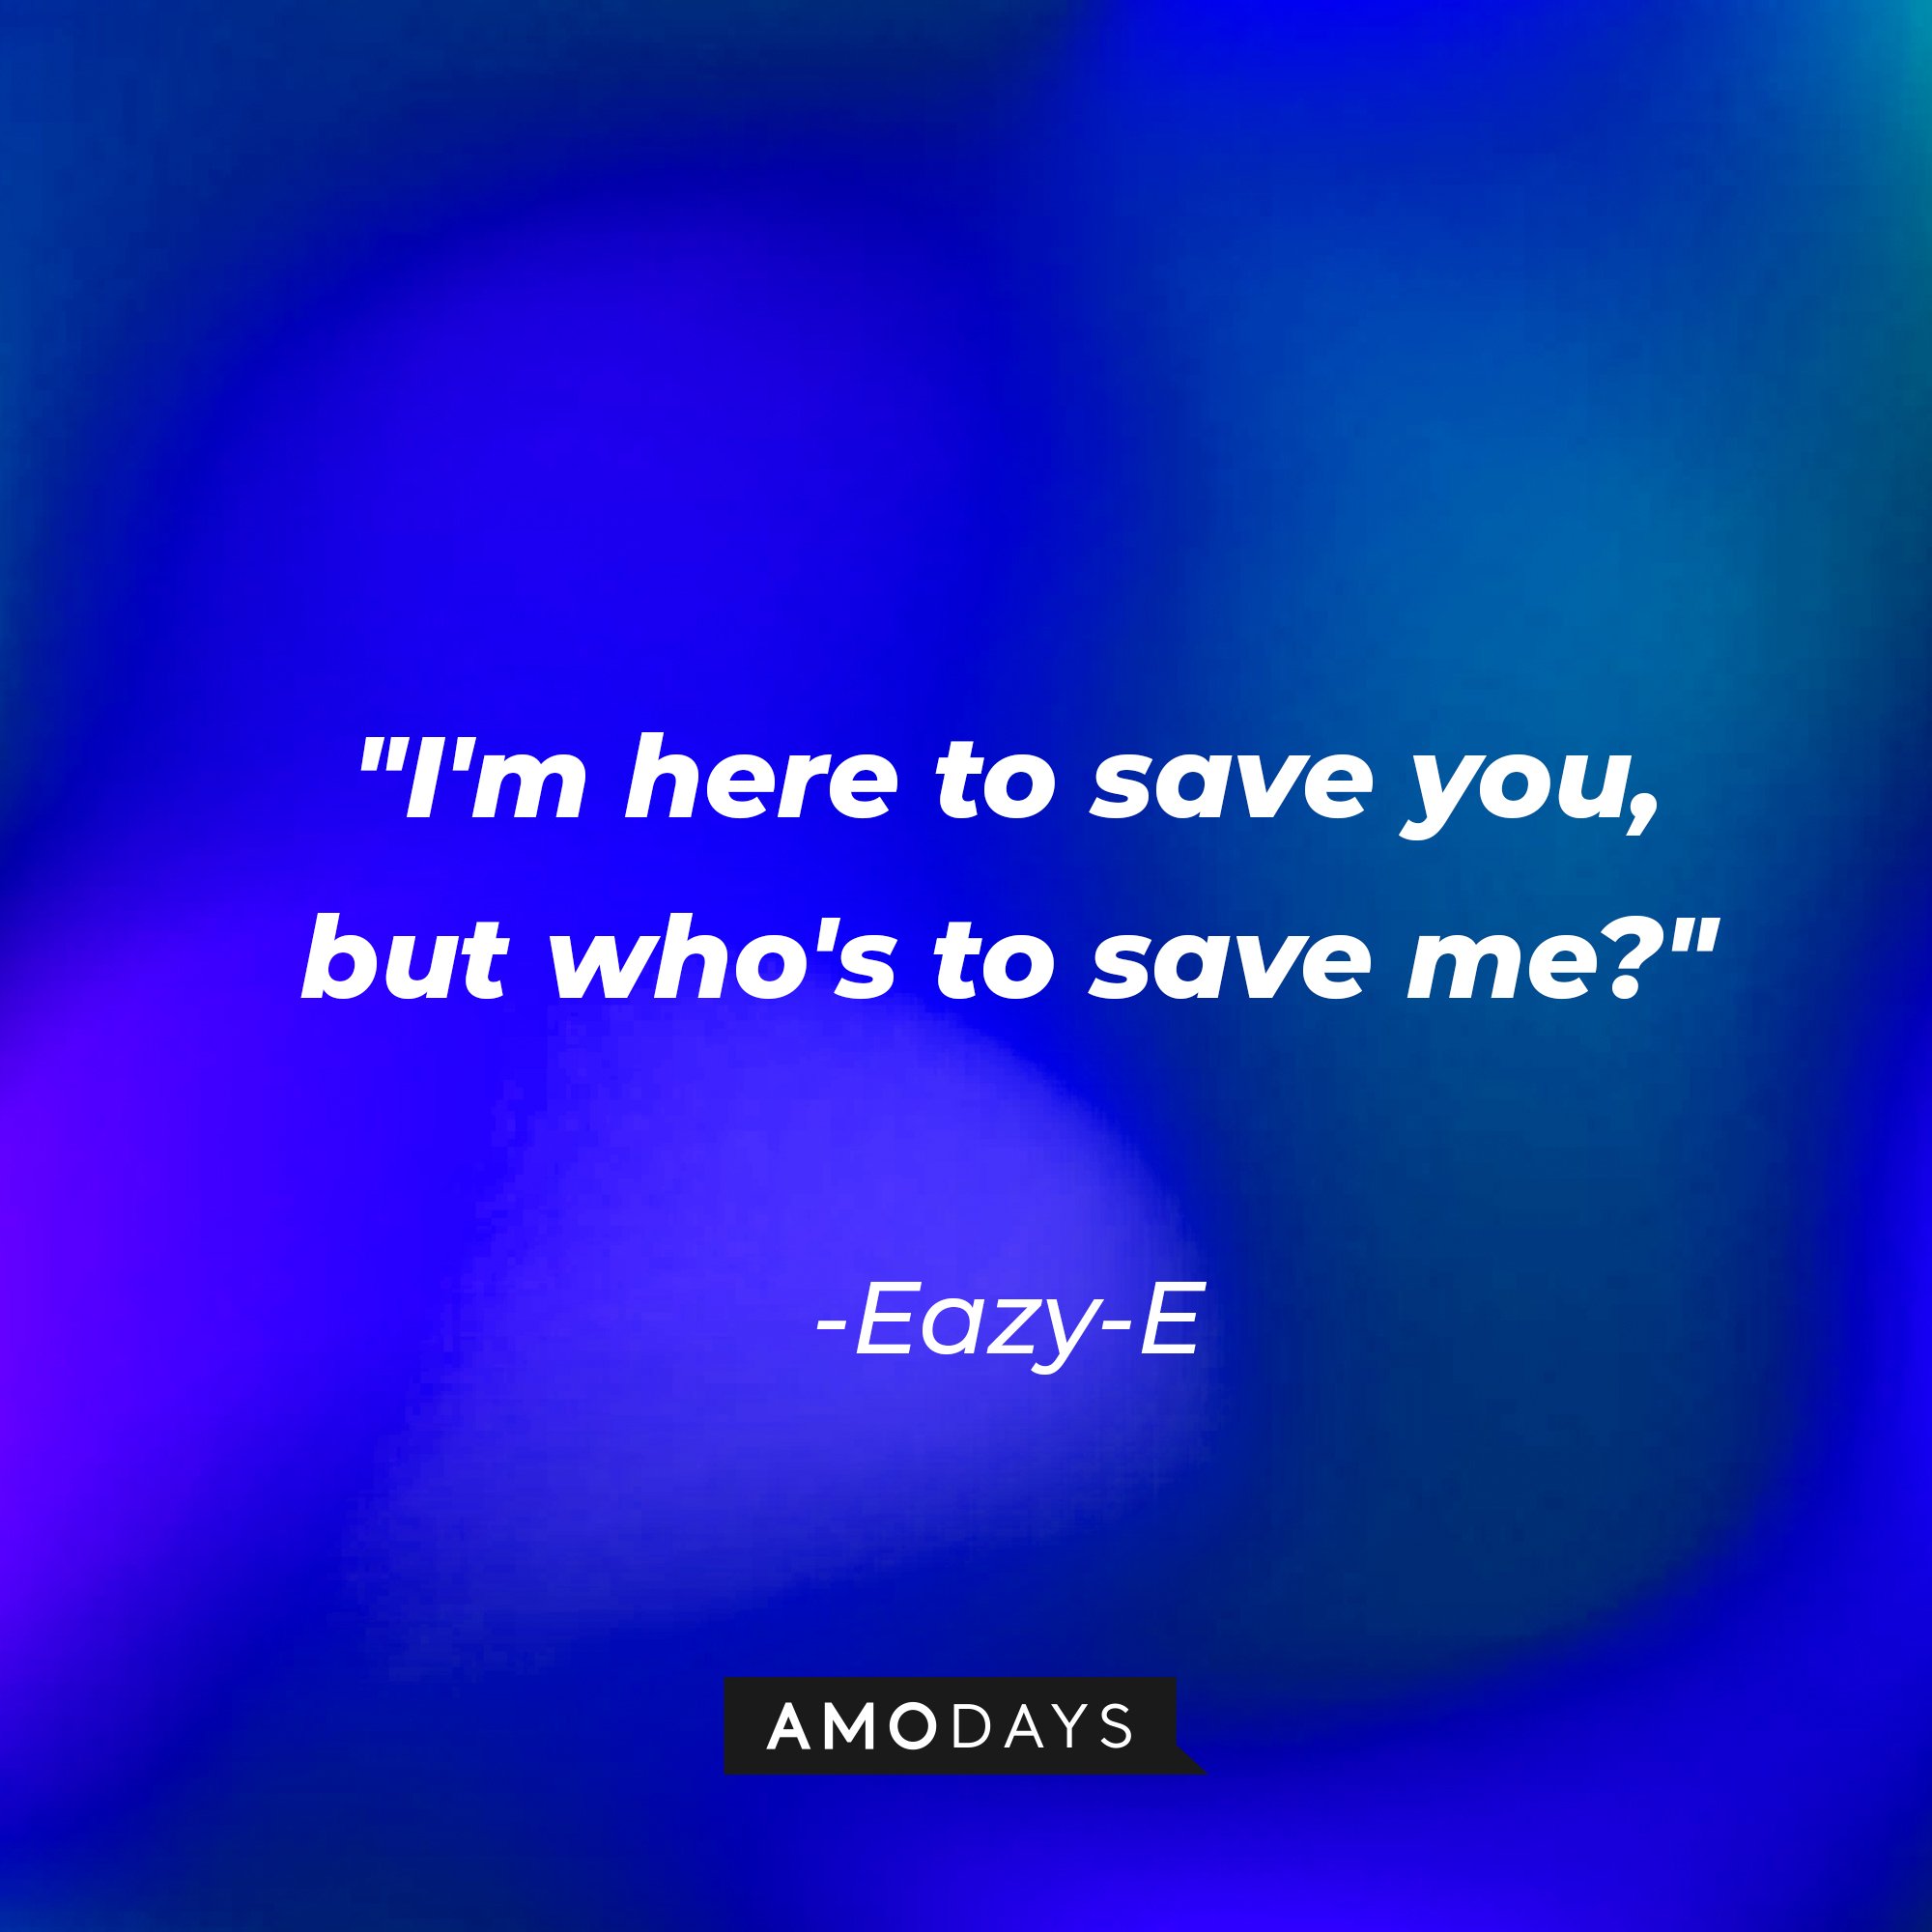 Eazy-E's quote: "I'm here to save you, but who's to save me?" | Image: AmoDays